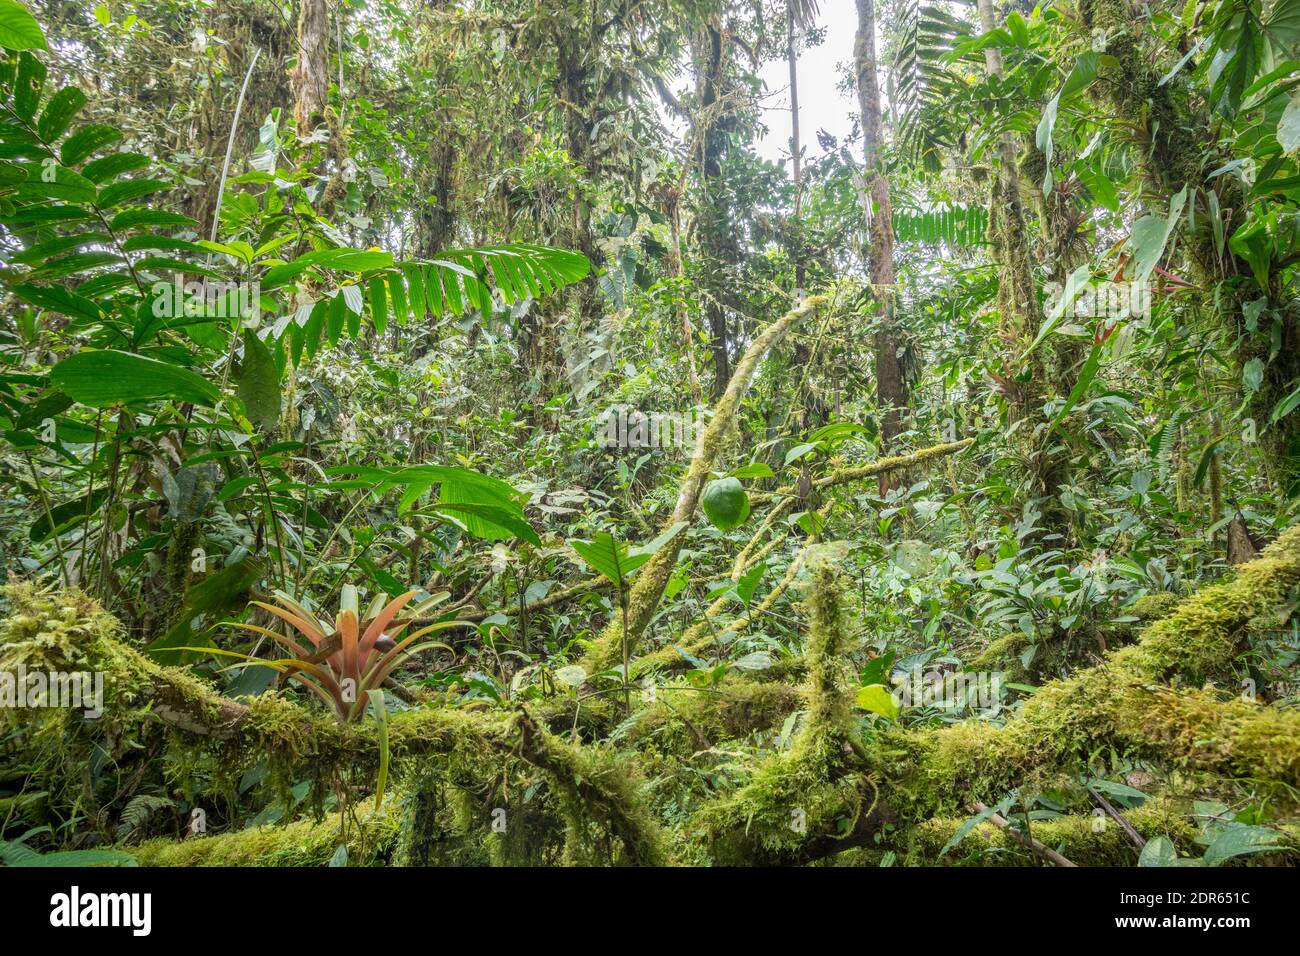 Moosiger Zweig im Bergregenwald (Nebelwald) im biodiverses Los Cedros Reservat im Westen Ecuadors. Stockfoto